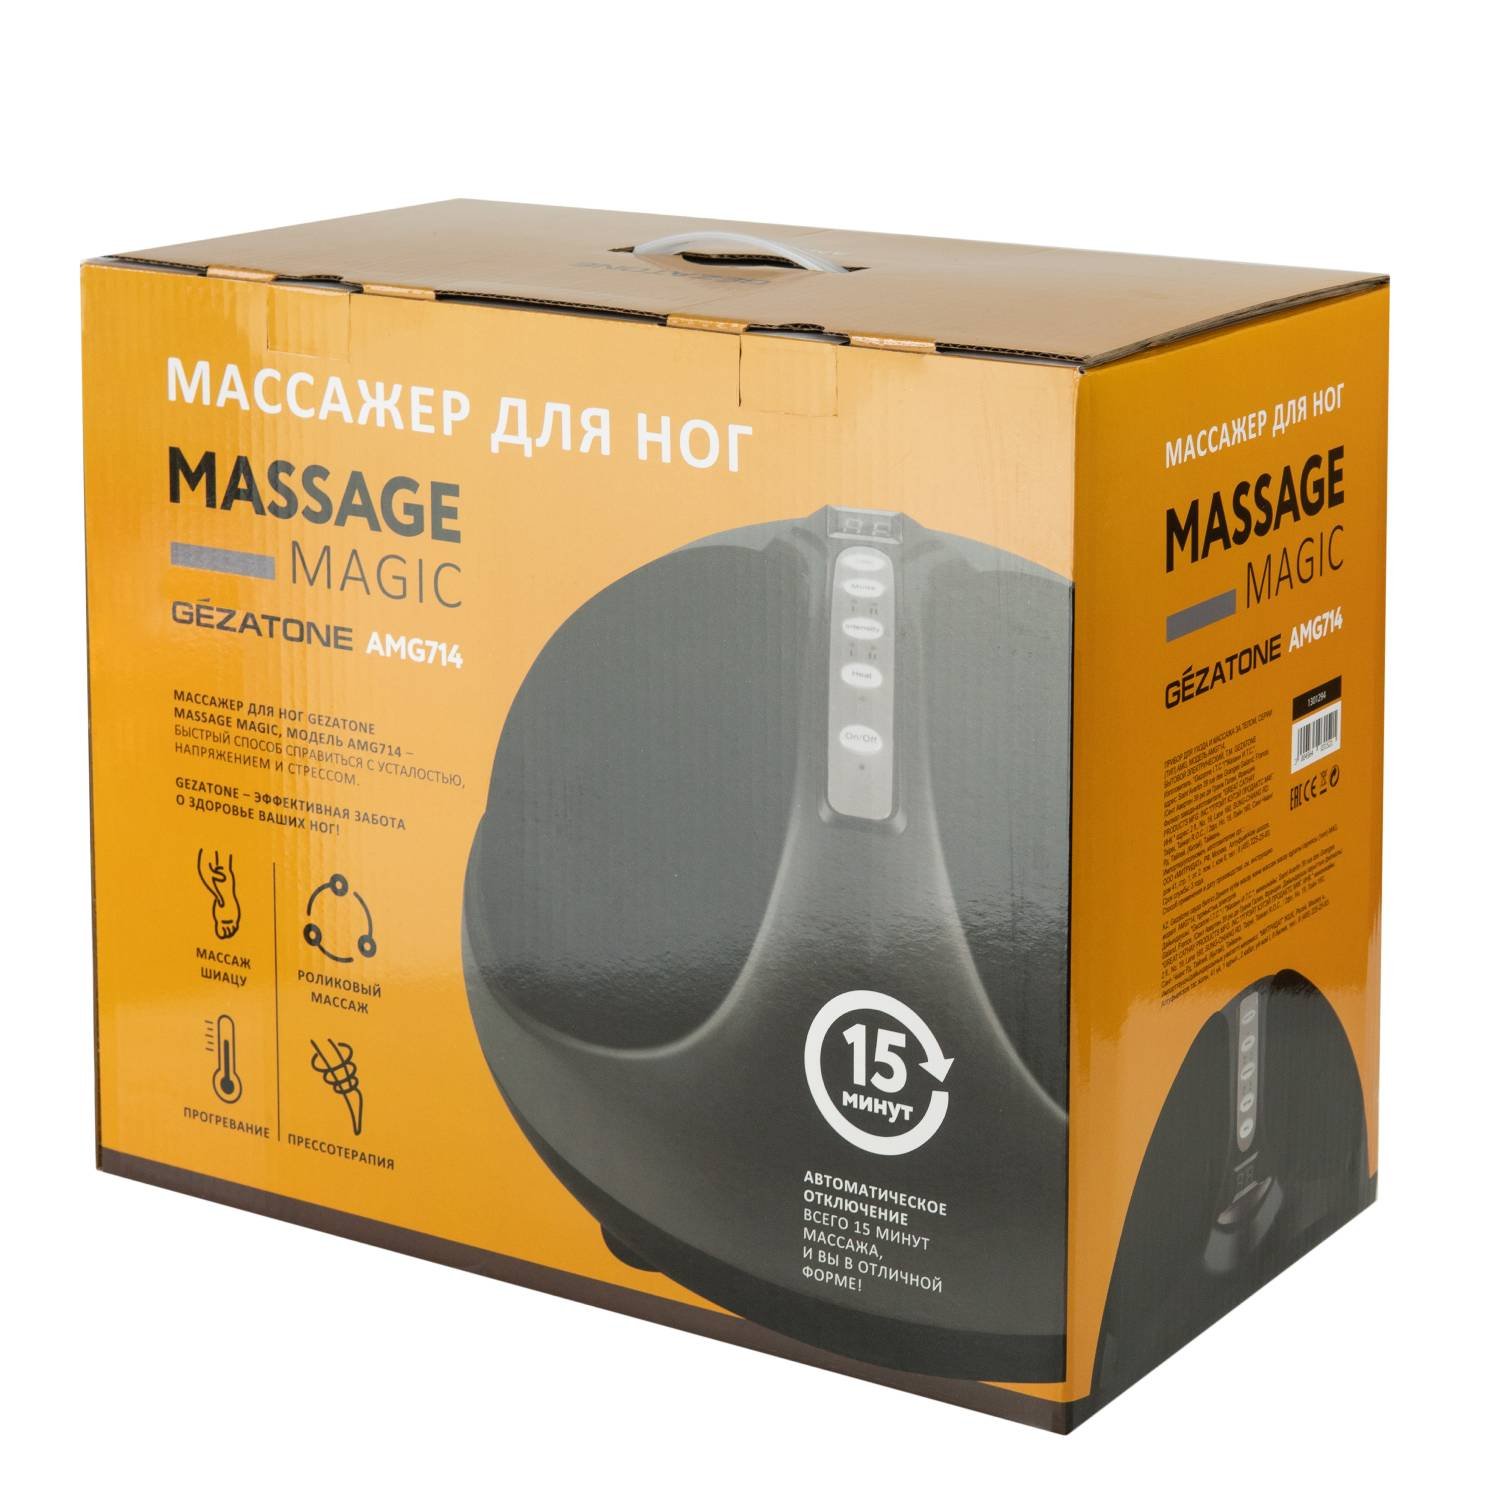 Massage magic. Массажер amg714 для ног. Массажер для массажа ног "massage Magic Graphite" Gezatone amg714. Массажер для ног Gezatone AMG 714. Массажер Gezatone massage Magic Graphite amg714 разборка.